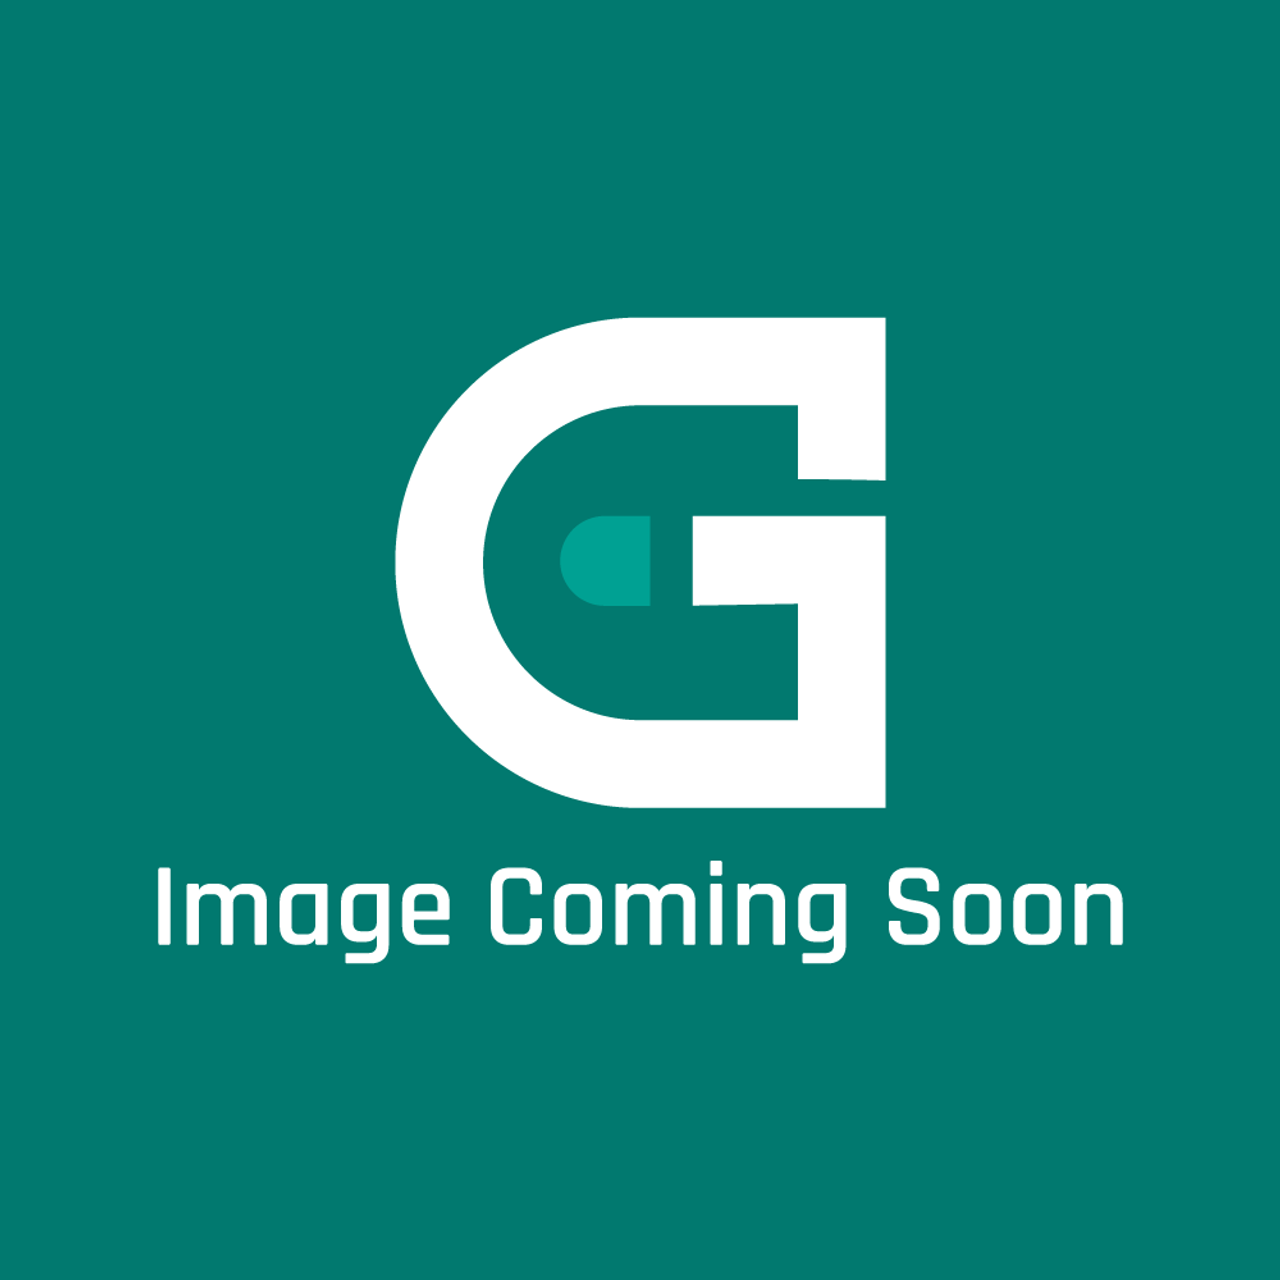 Blodgett 57796 - Kit, Lp To Ng Convert Hv 100G - Image Coming Soon!